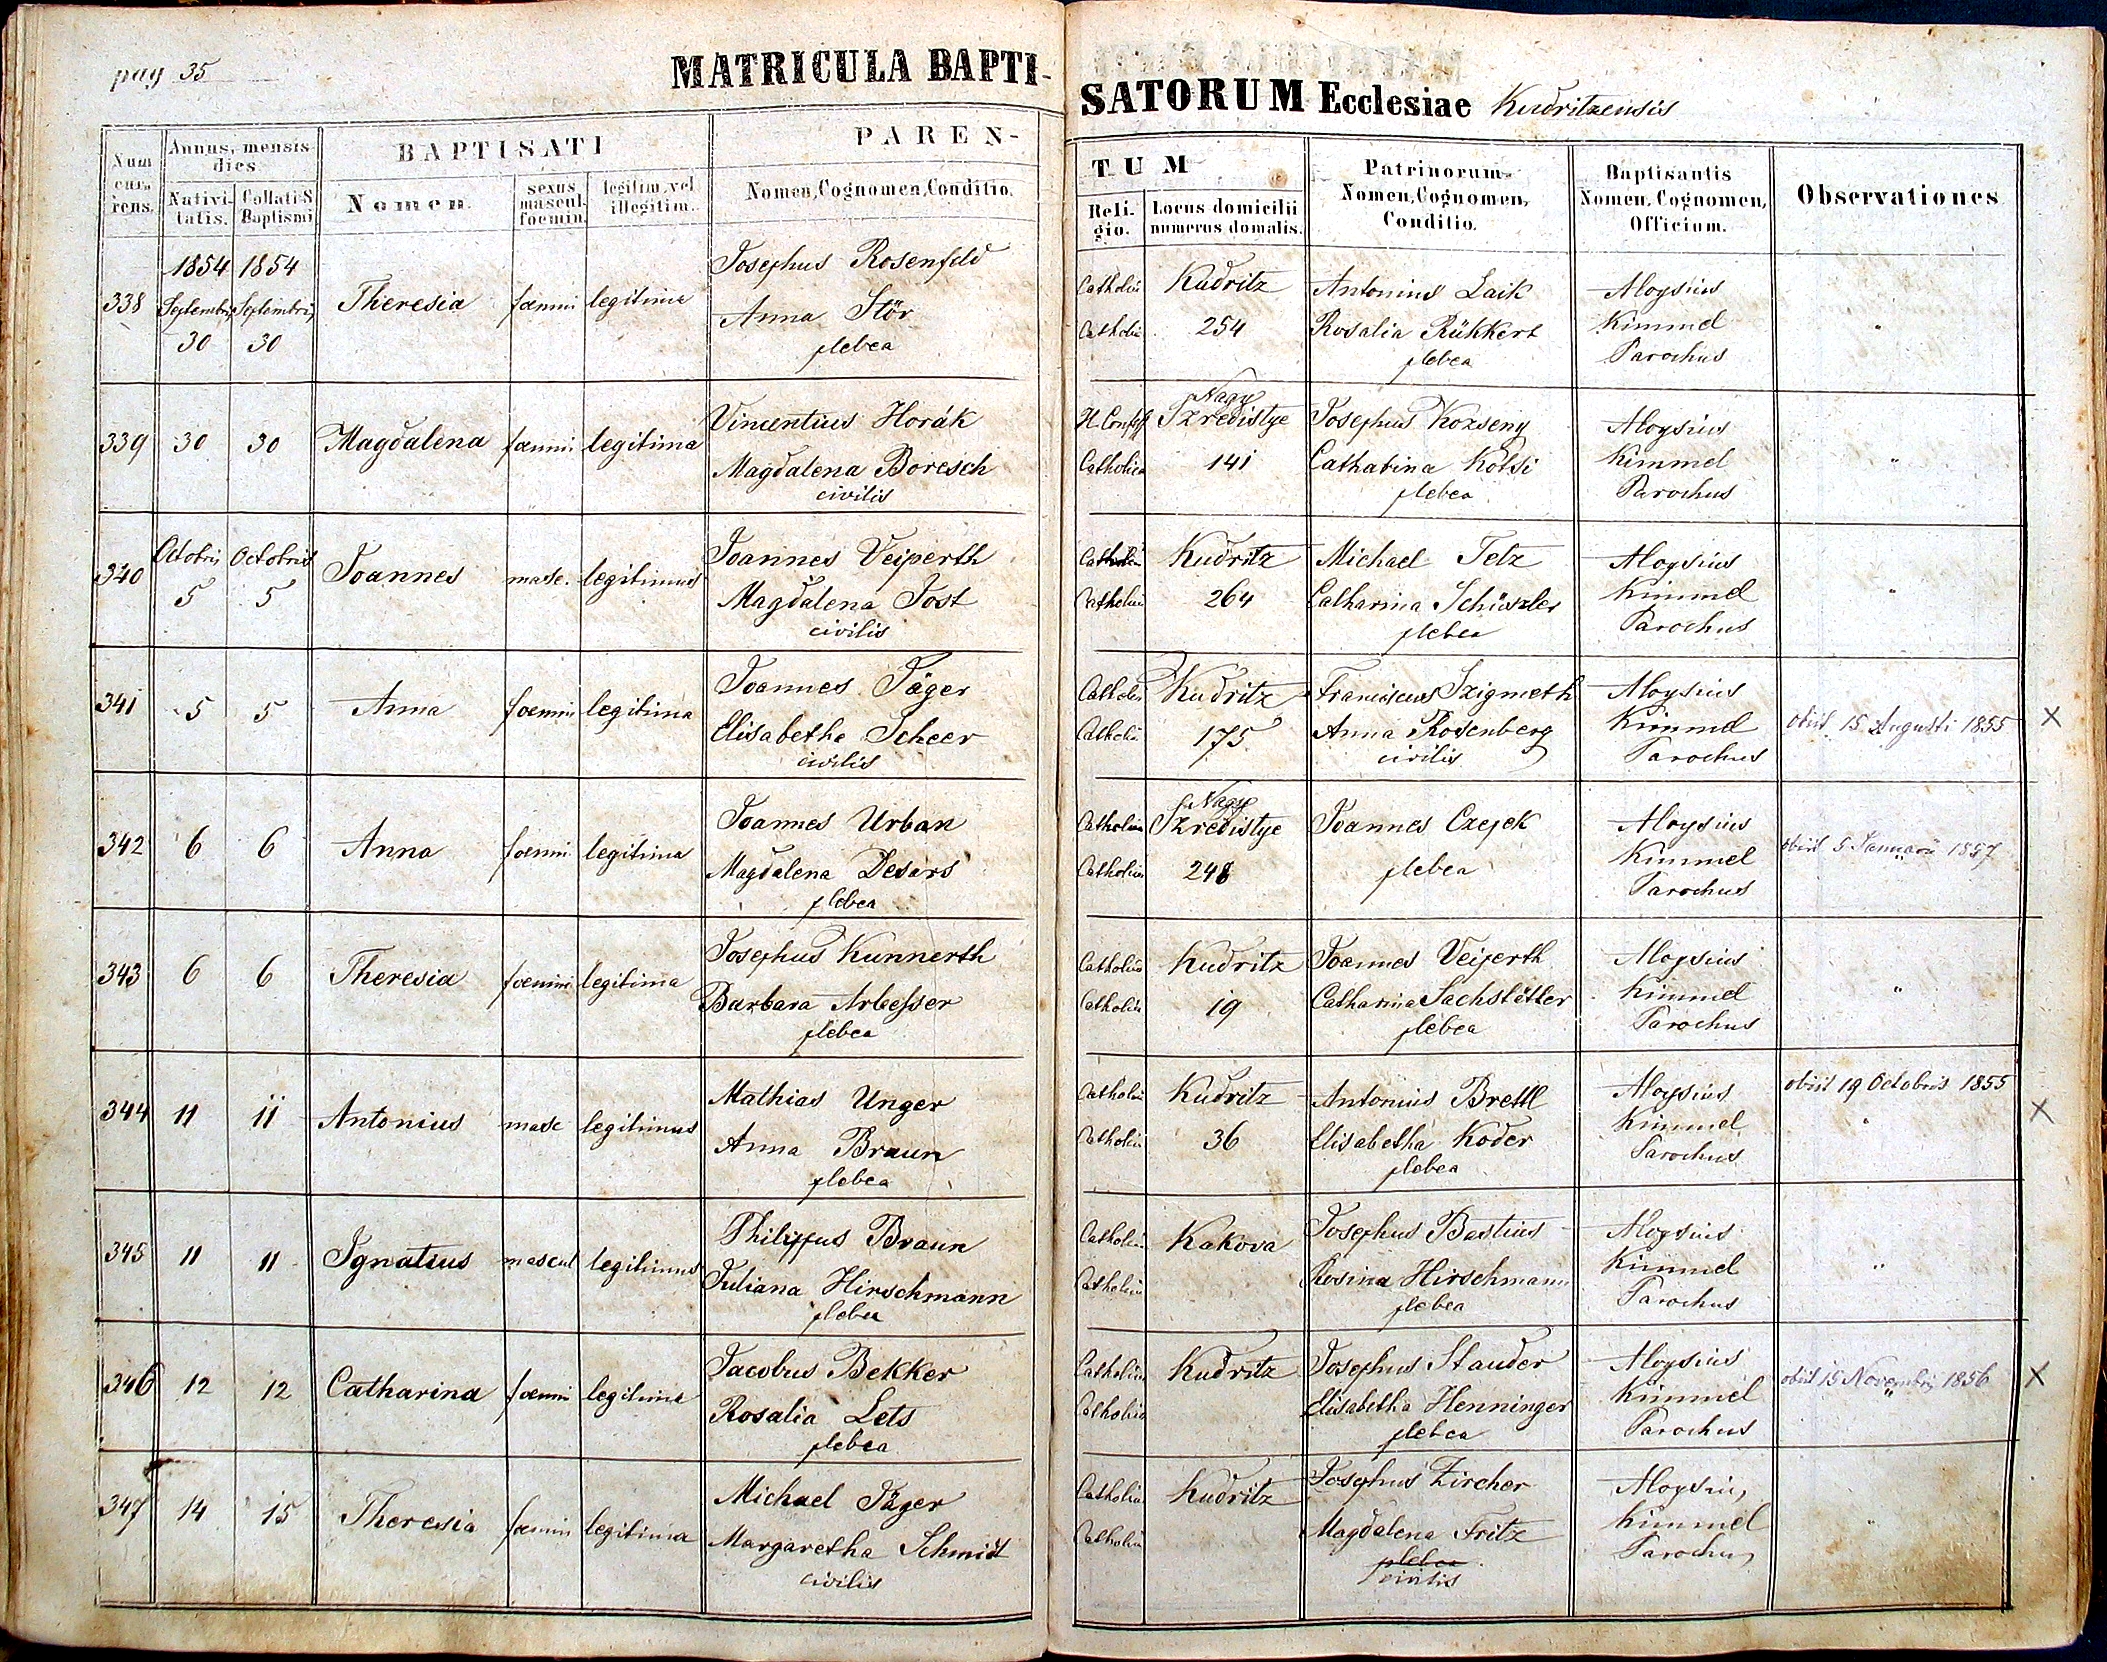 images/church_records/BIRTHS/1852-1870B/035